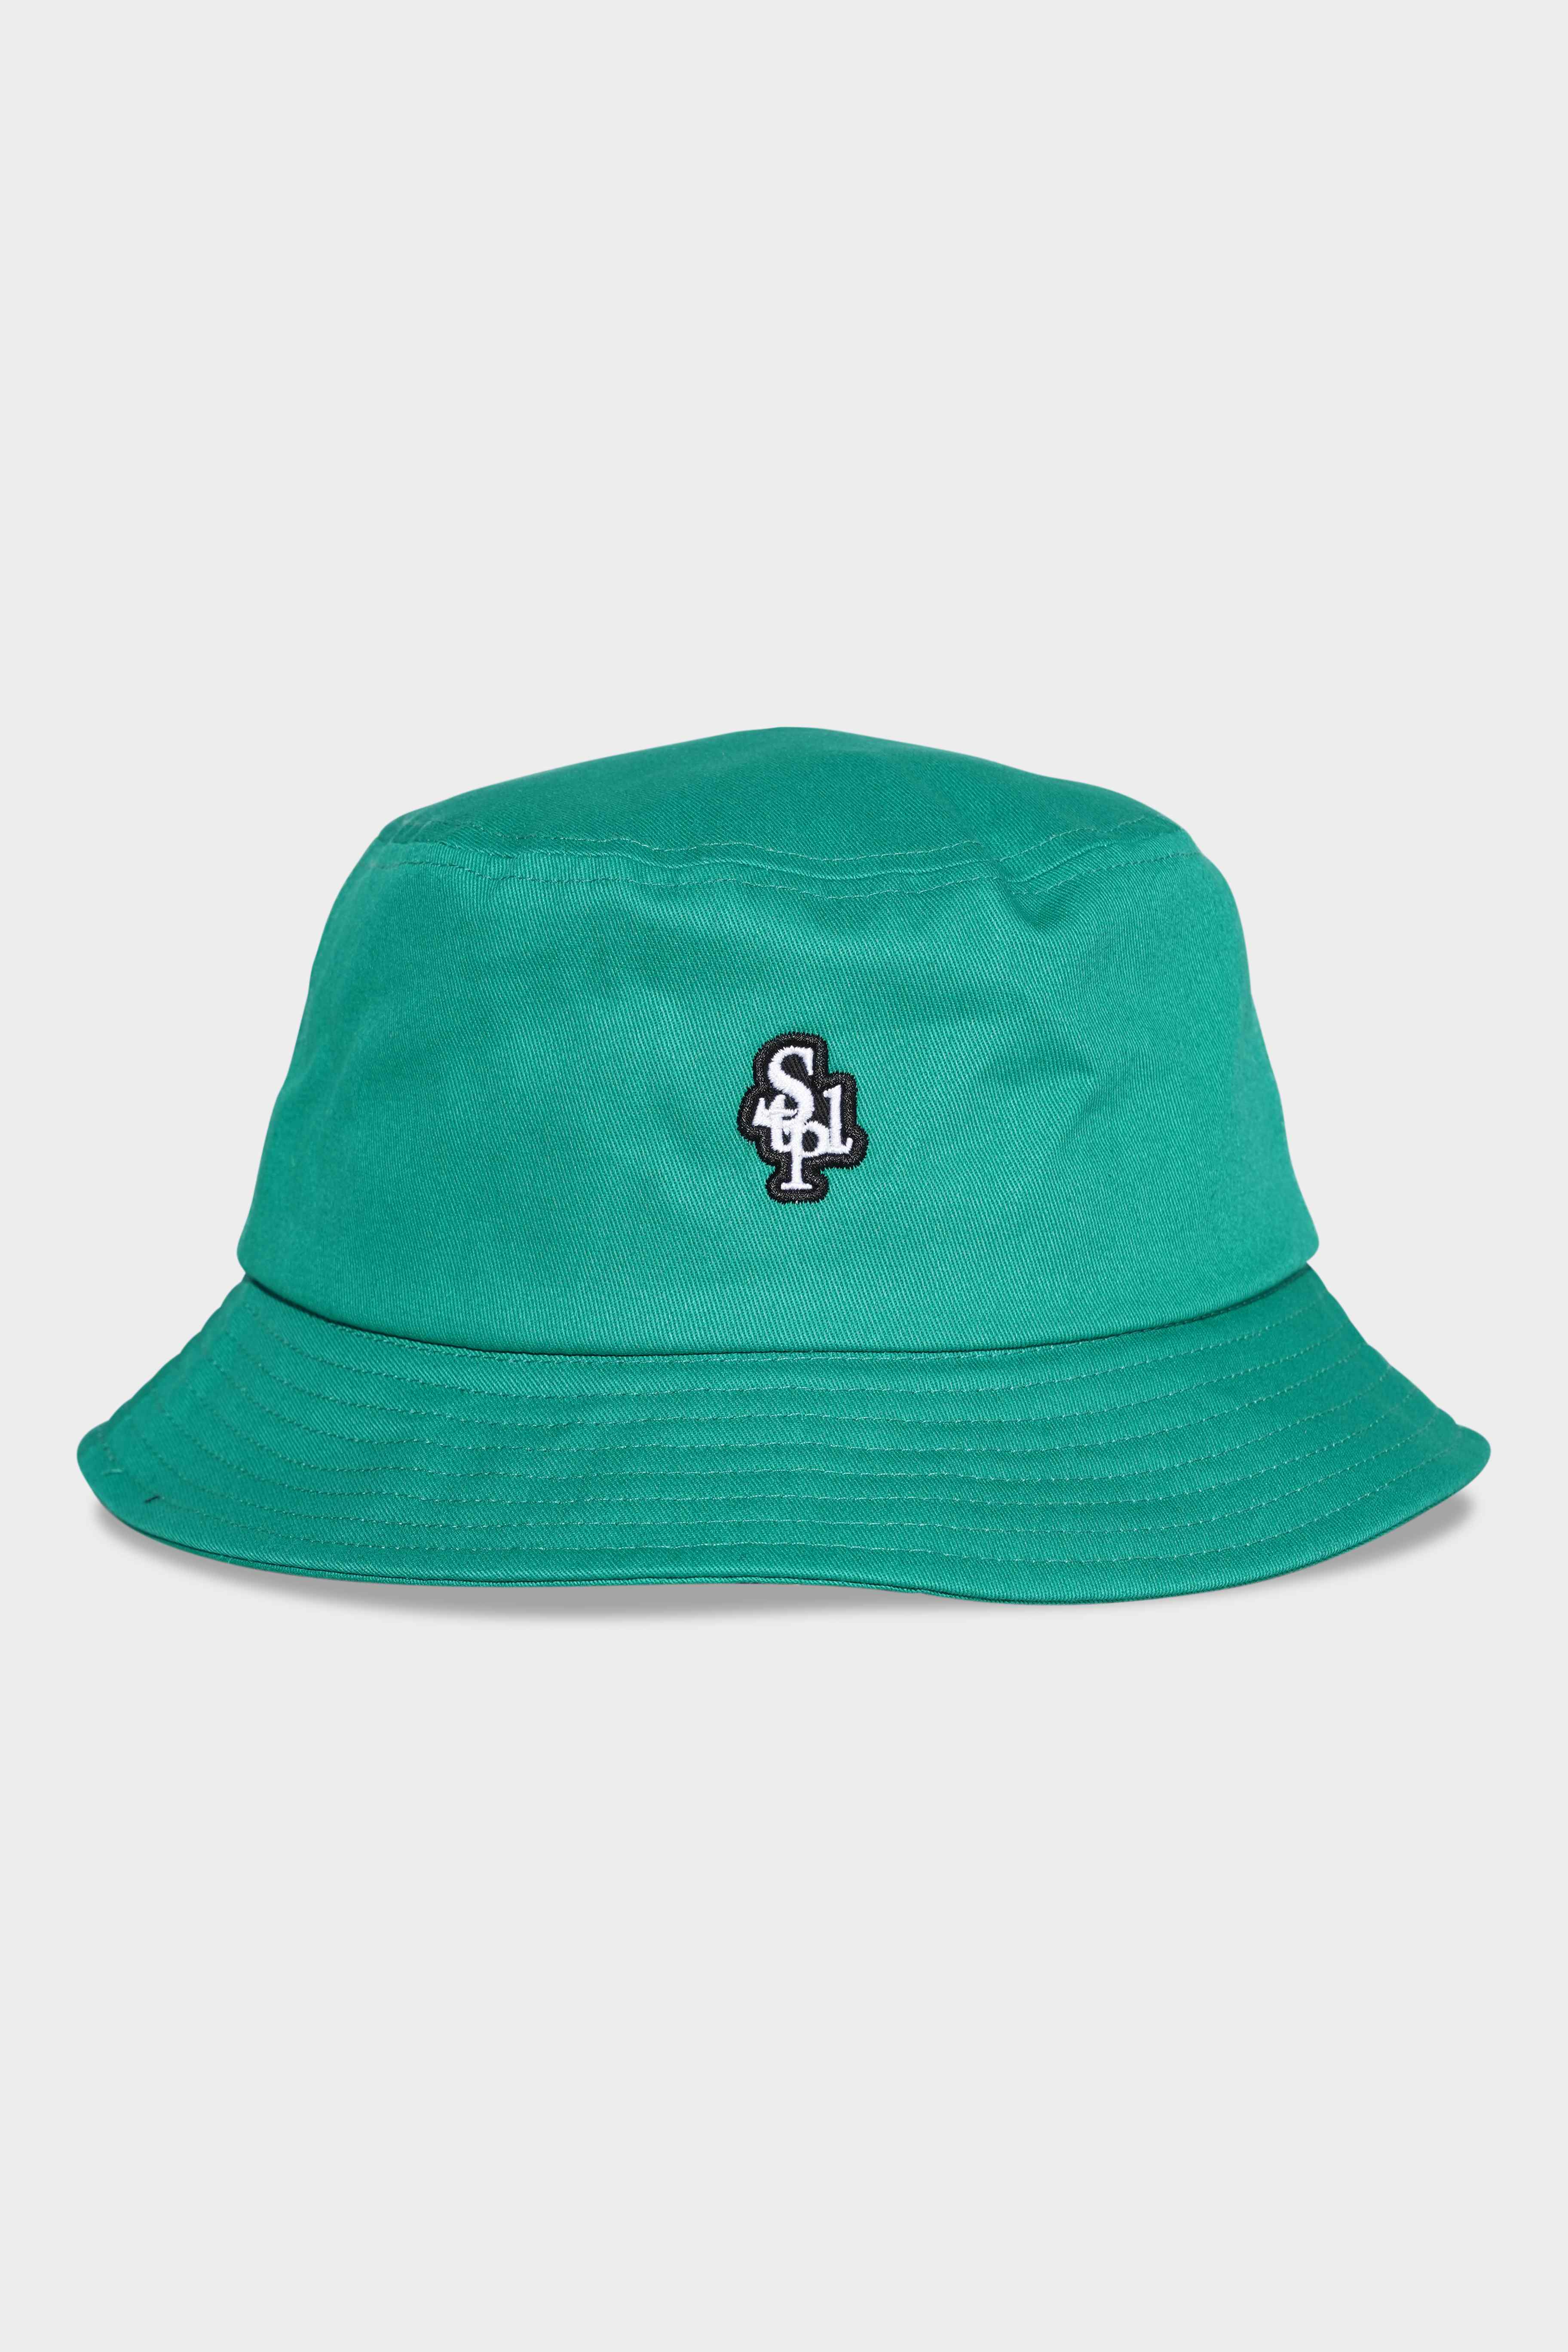 Staple Bedlam Bucky Hat Green